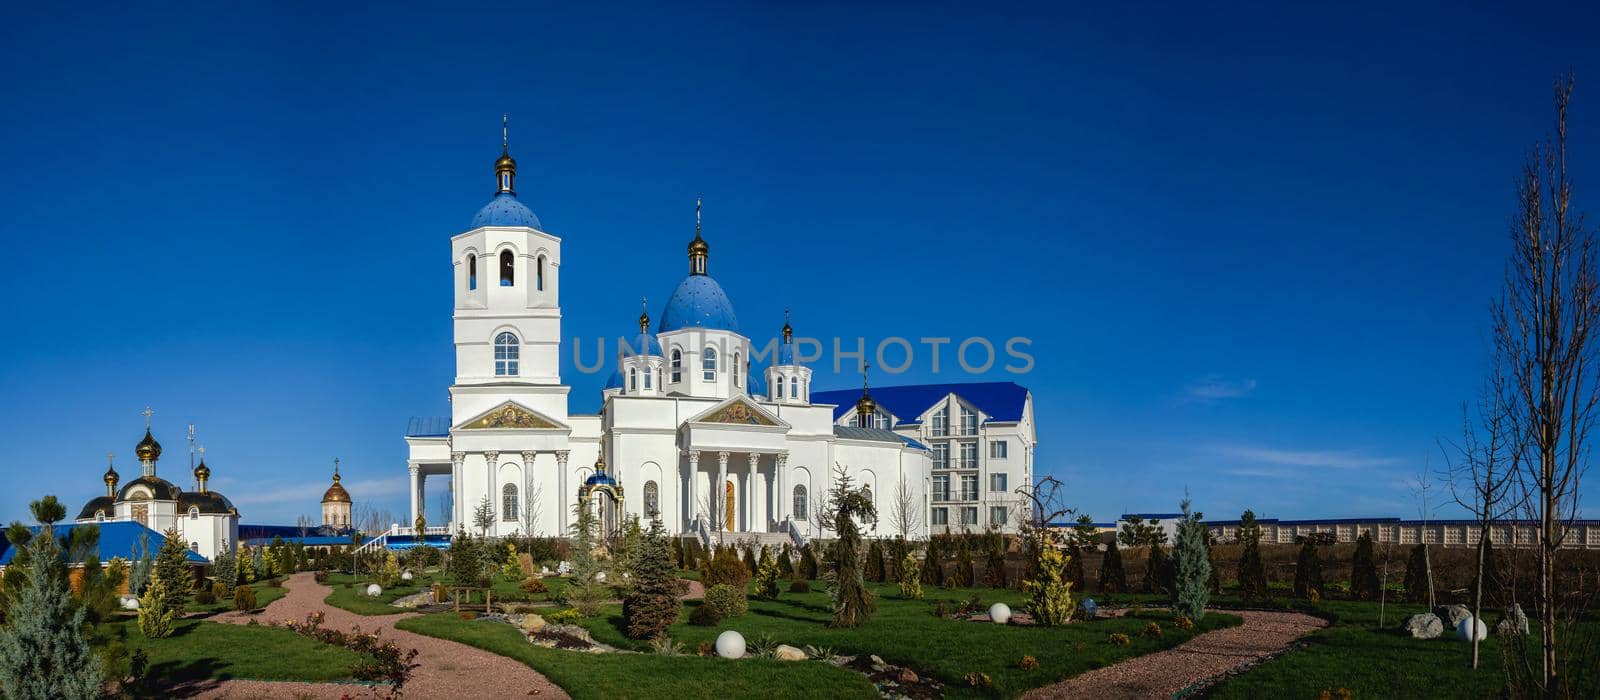 Holy Protection Monastery in Marinovka village, Ukraine by Multipedia